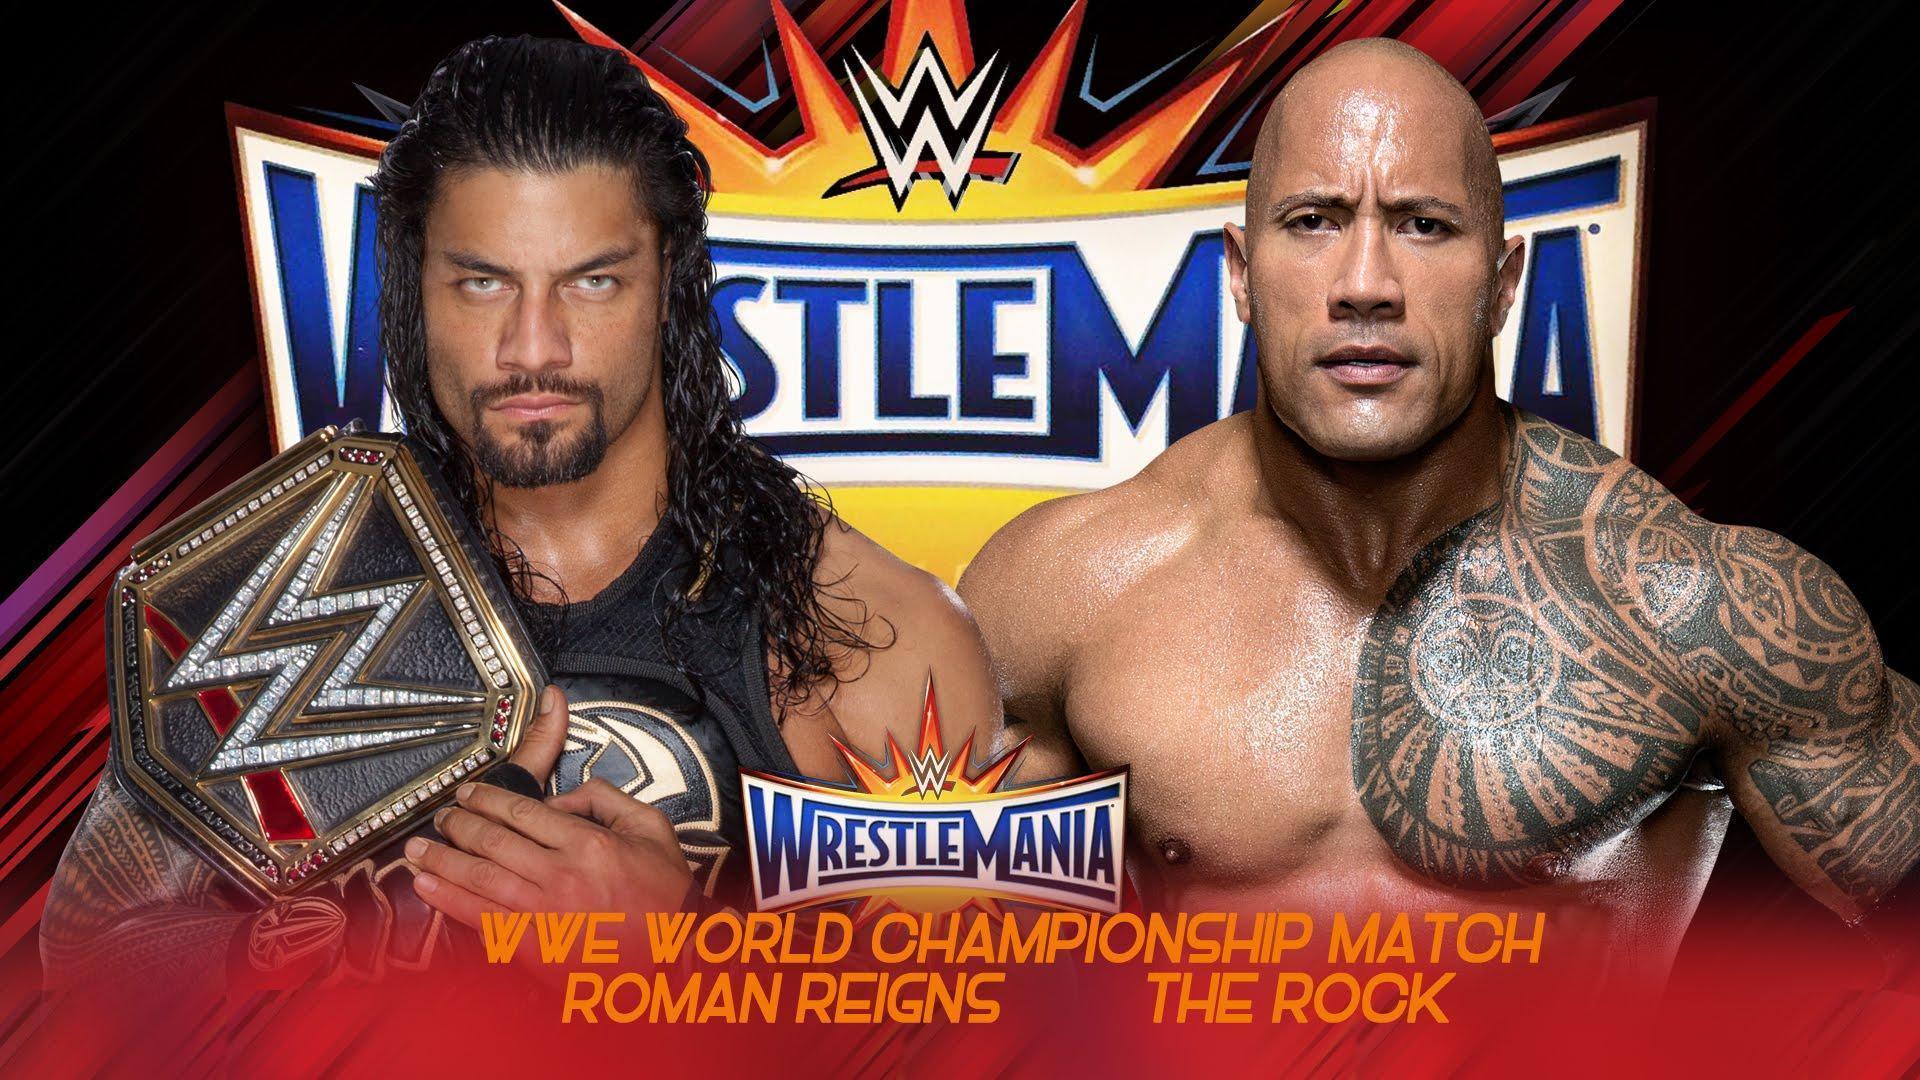 Roman Reigns vs The Rock Wrestlemania 33